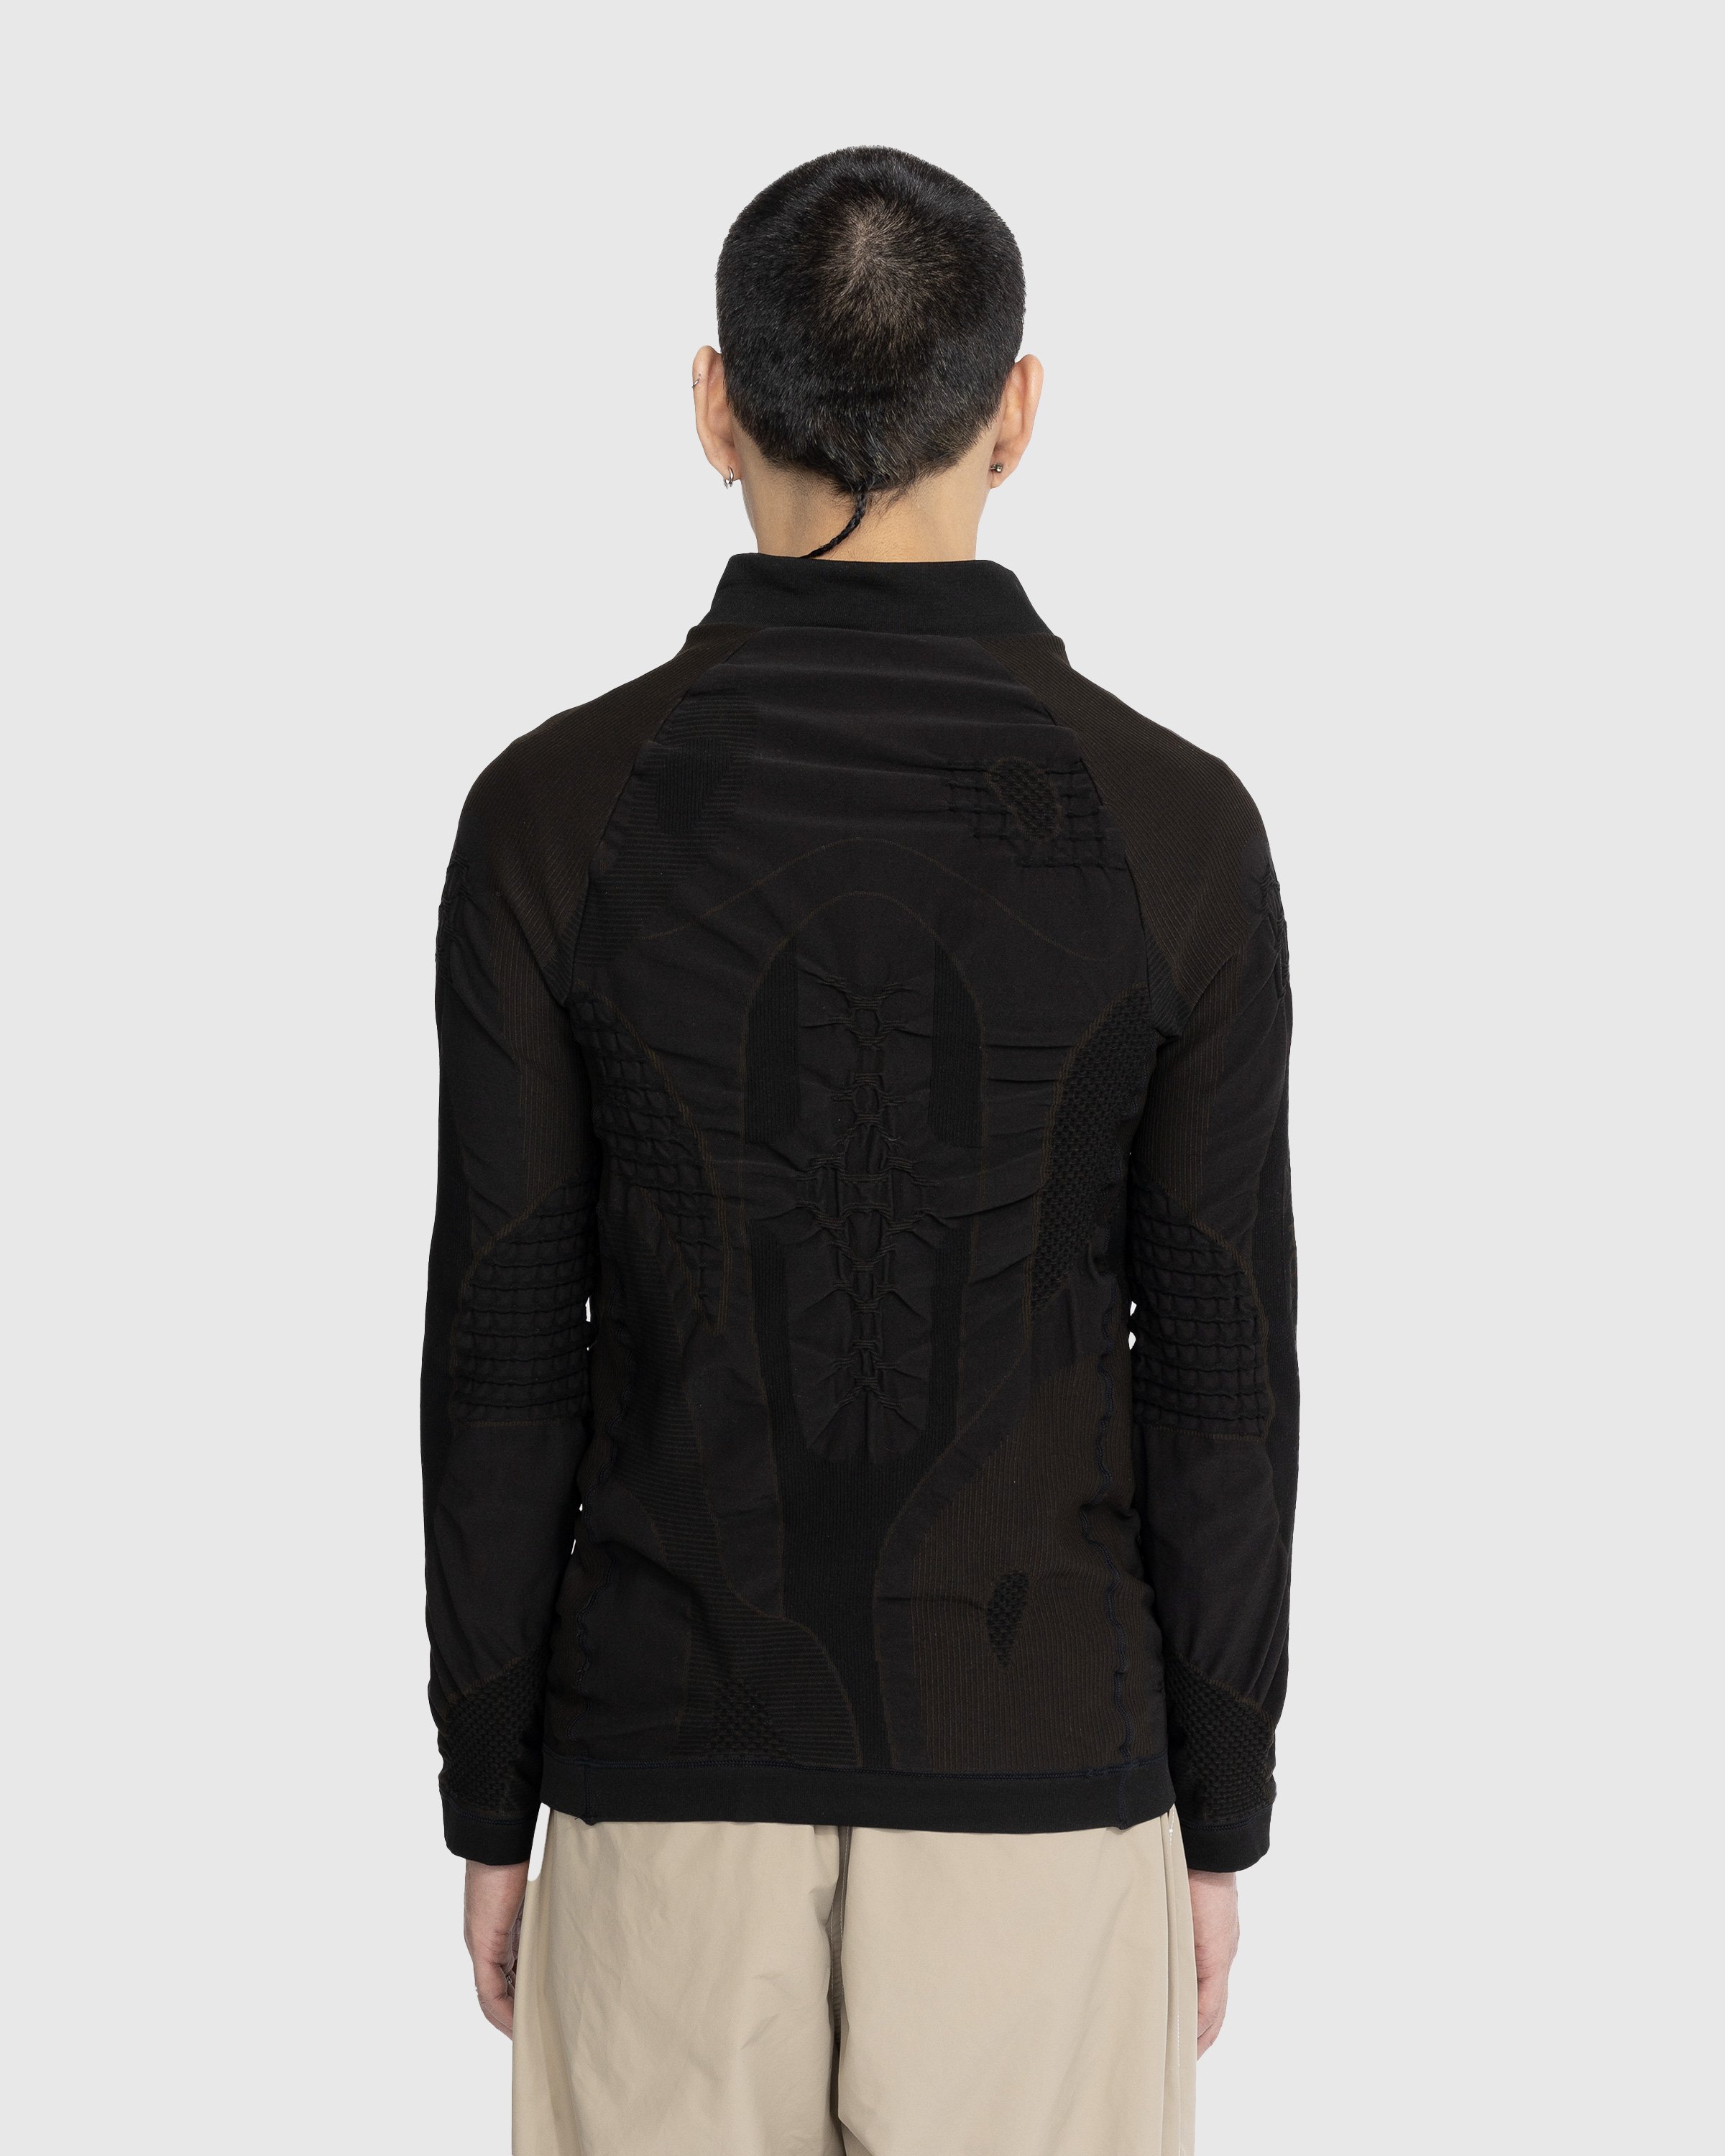 ROA - Half Zip 3D Knit Black - Clothing - Black - Image 3